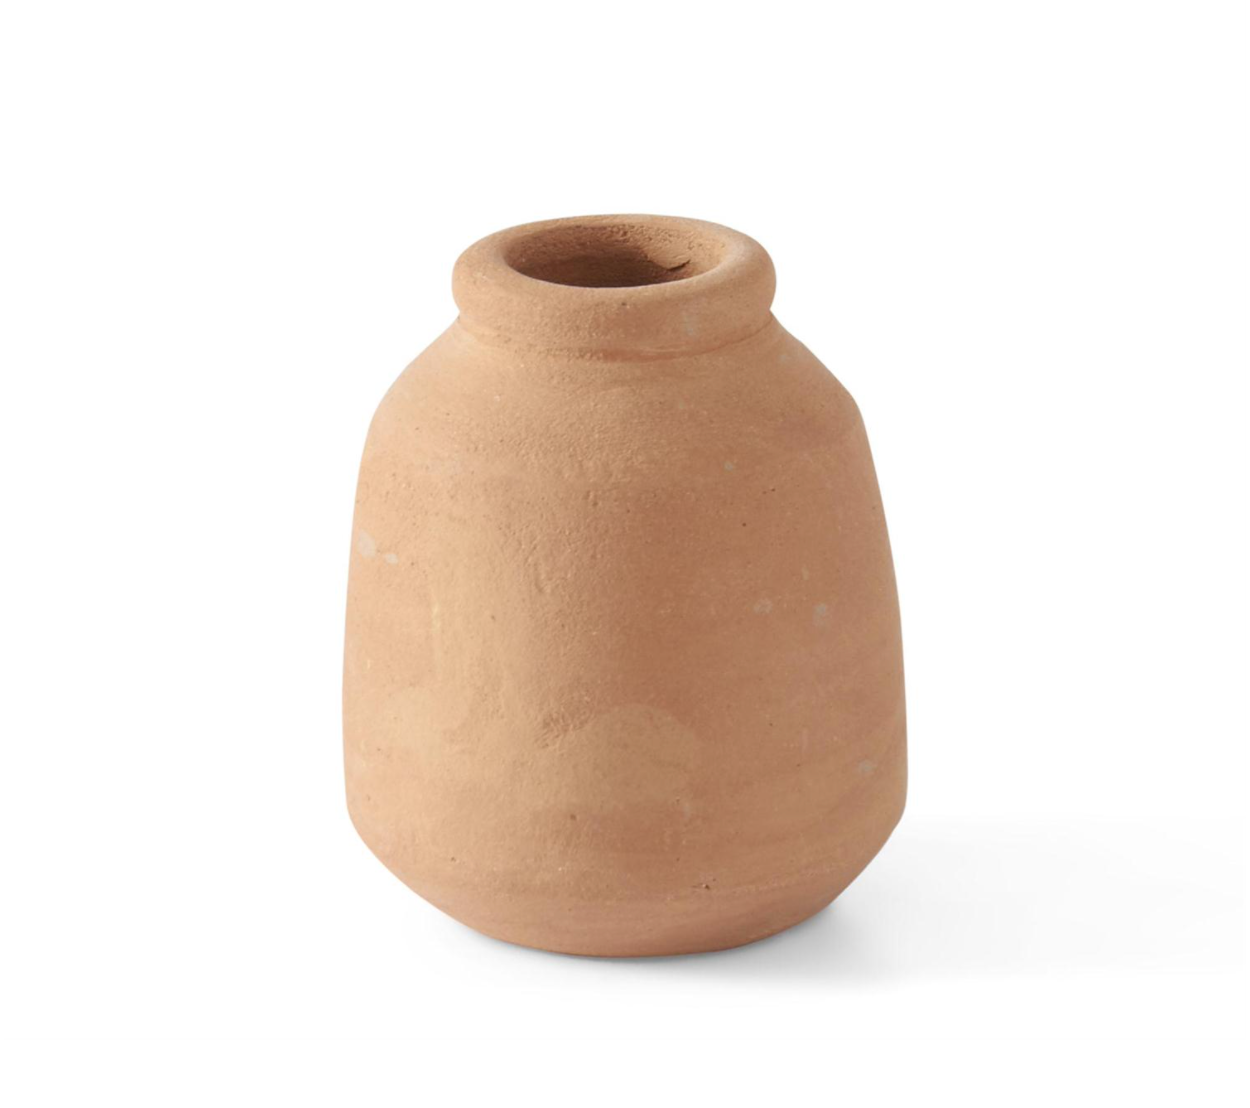 Mini Terracotta Vase - Danshire Market and Design 